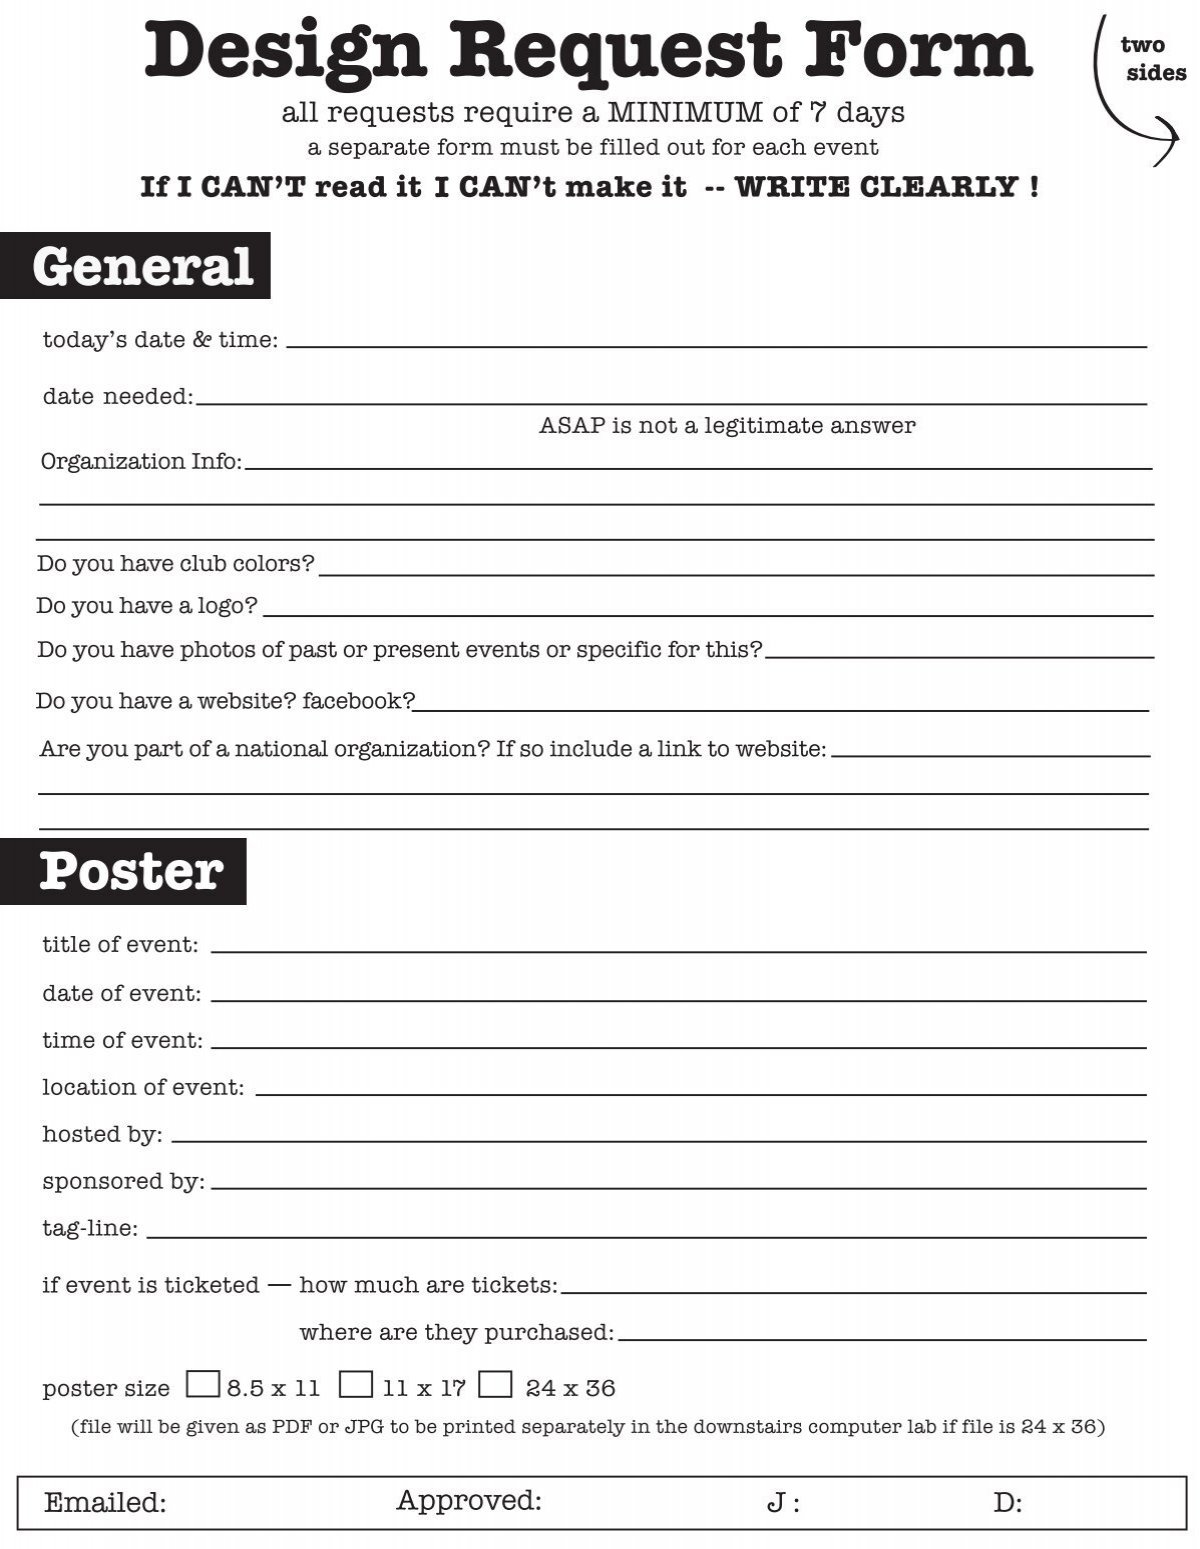 Design Request Form